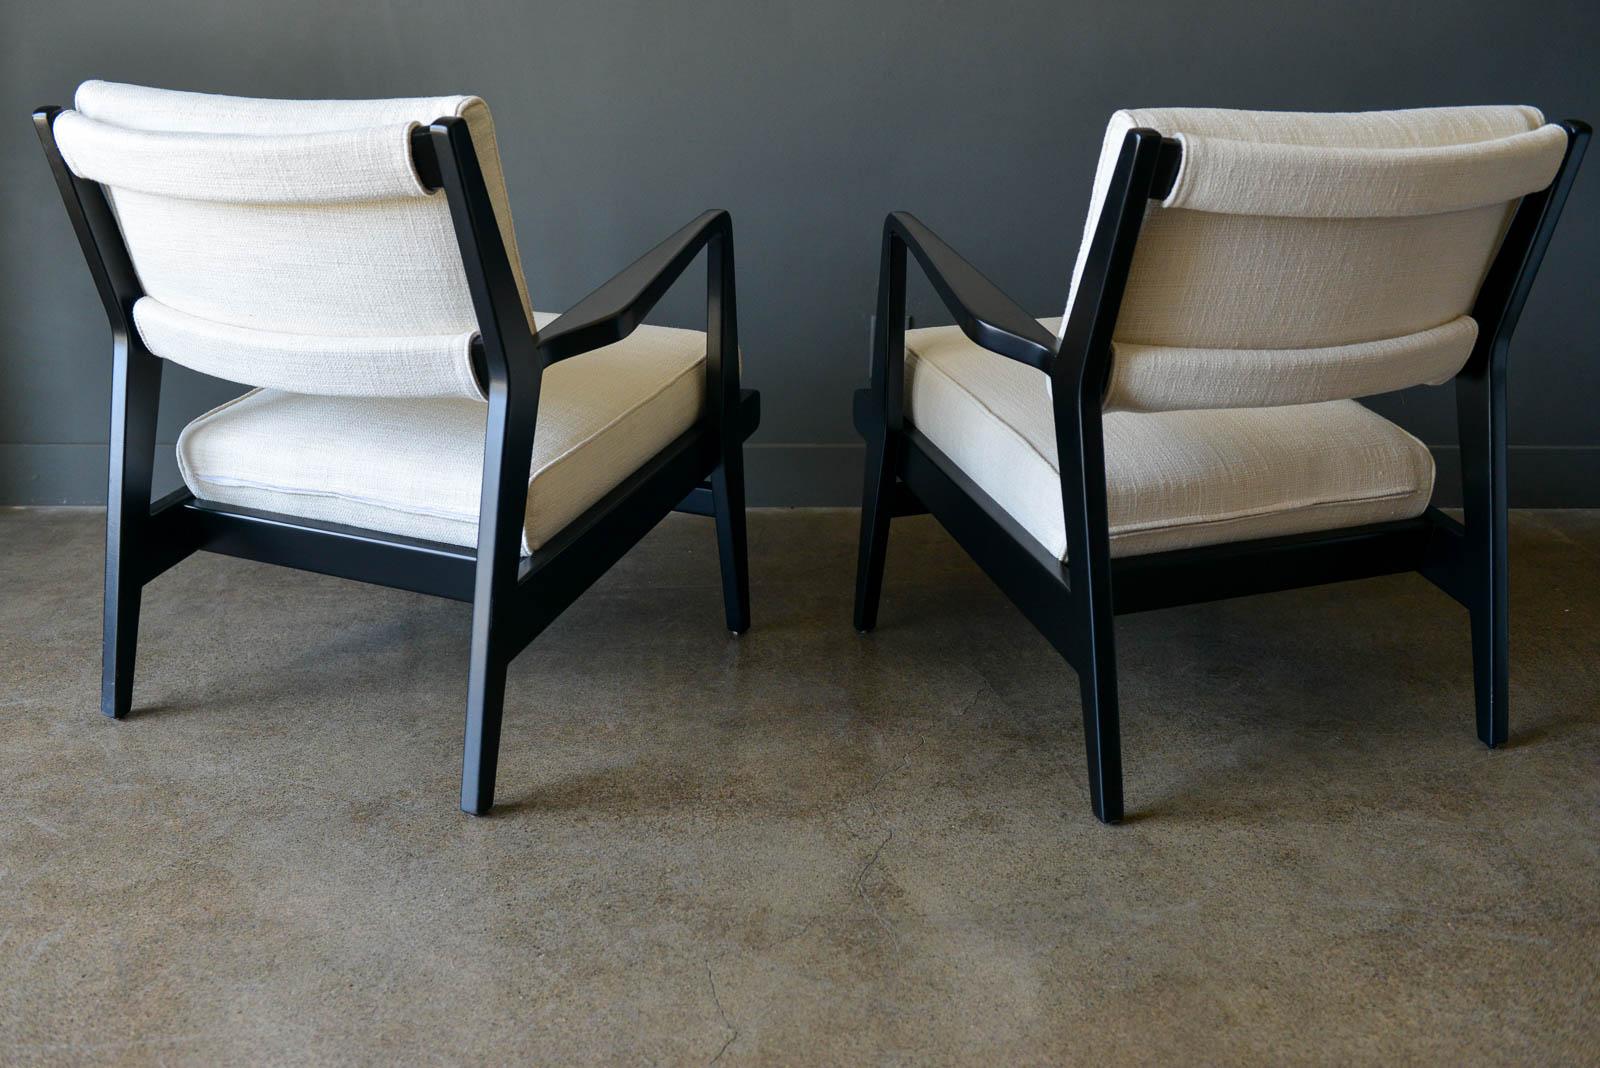 Birch Pair of Ebonized Lounge Chairs by Jens Risom, ca. 1965